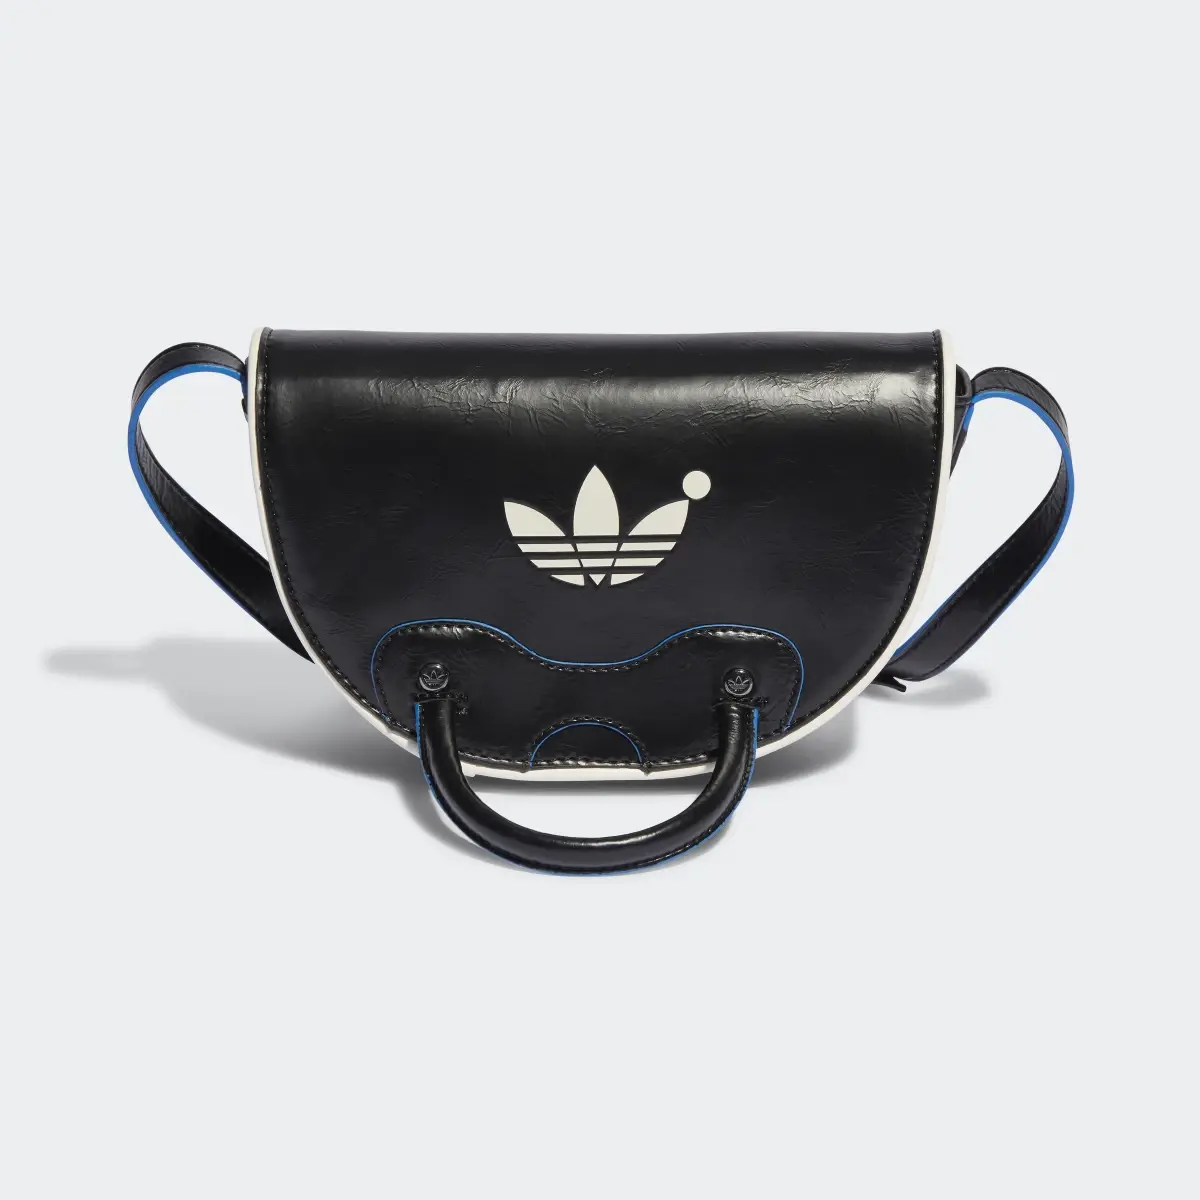 Adidas Blue Version Satchel Bag. 2